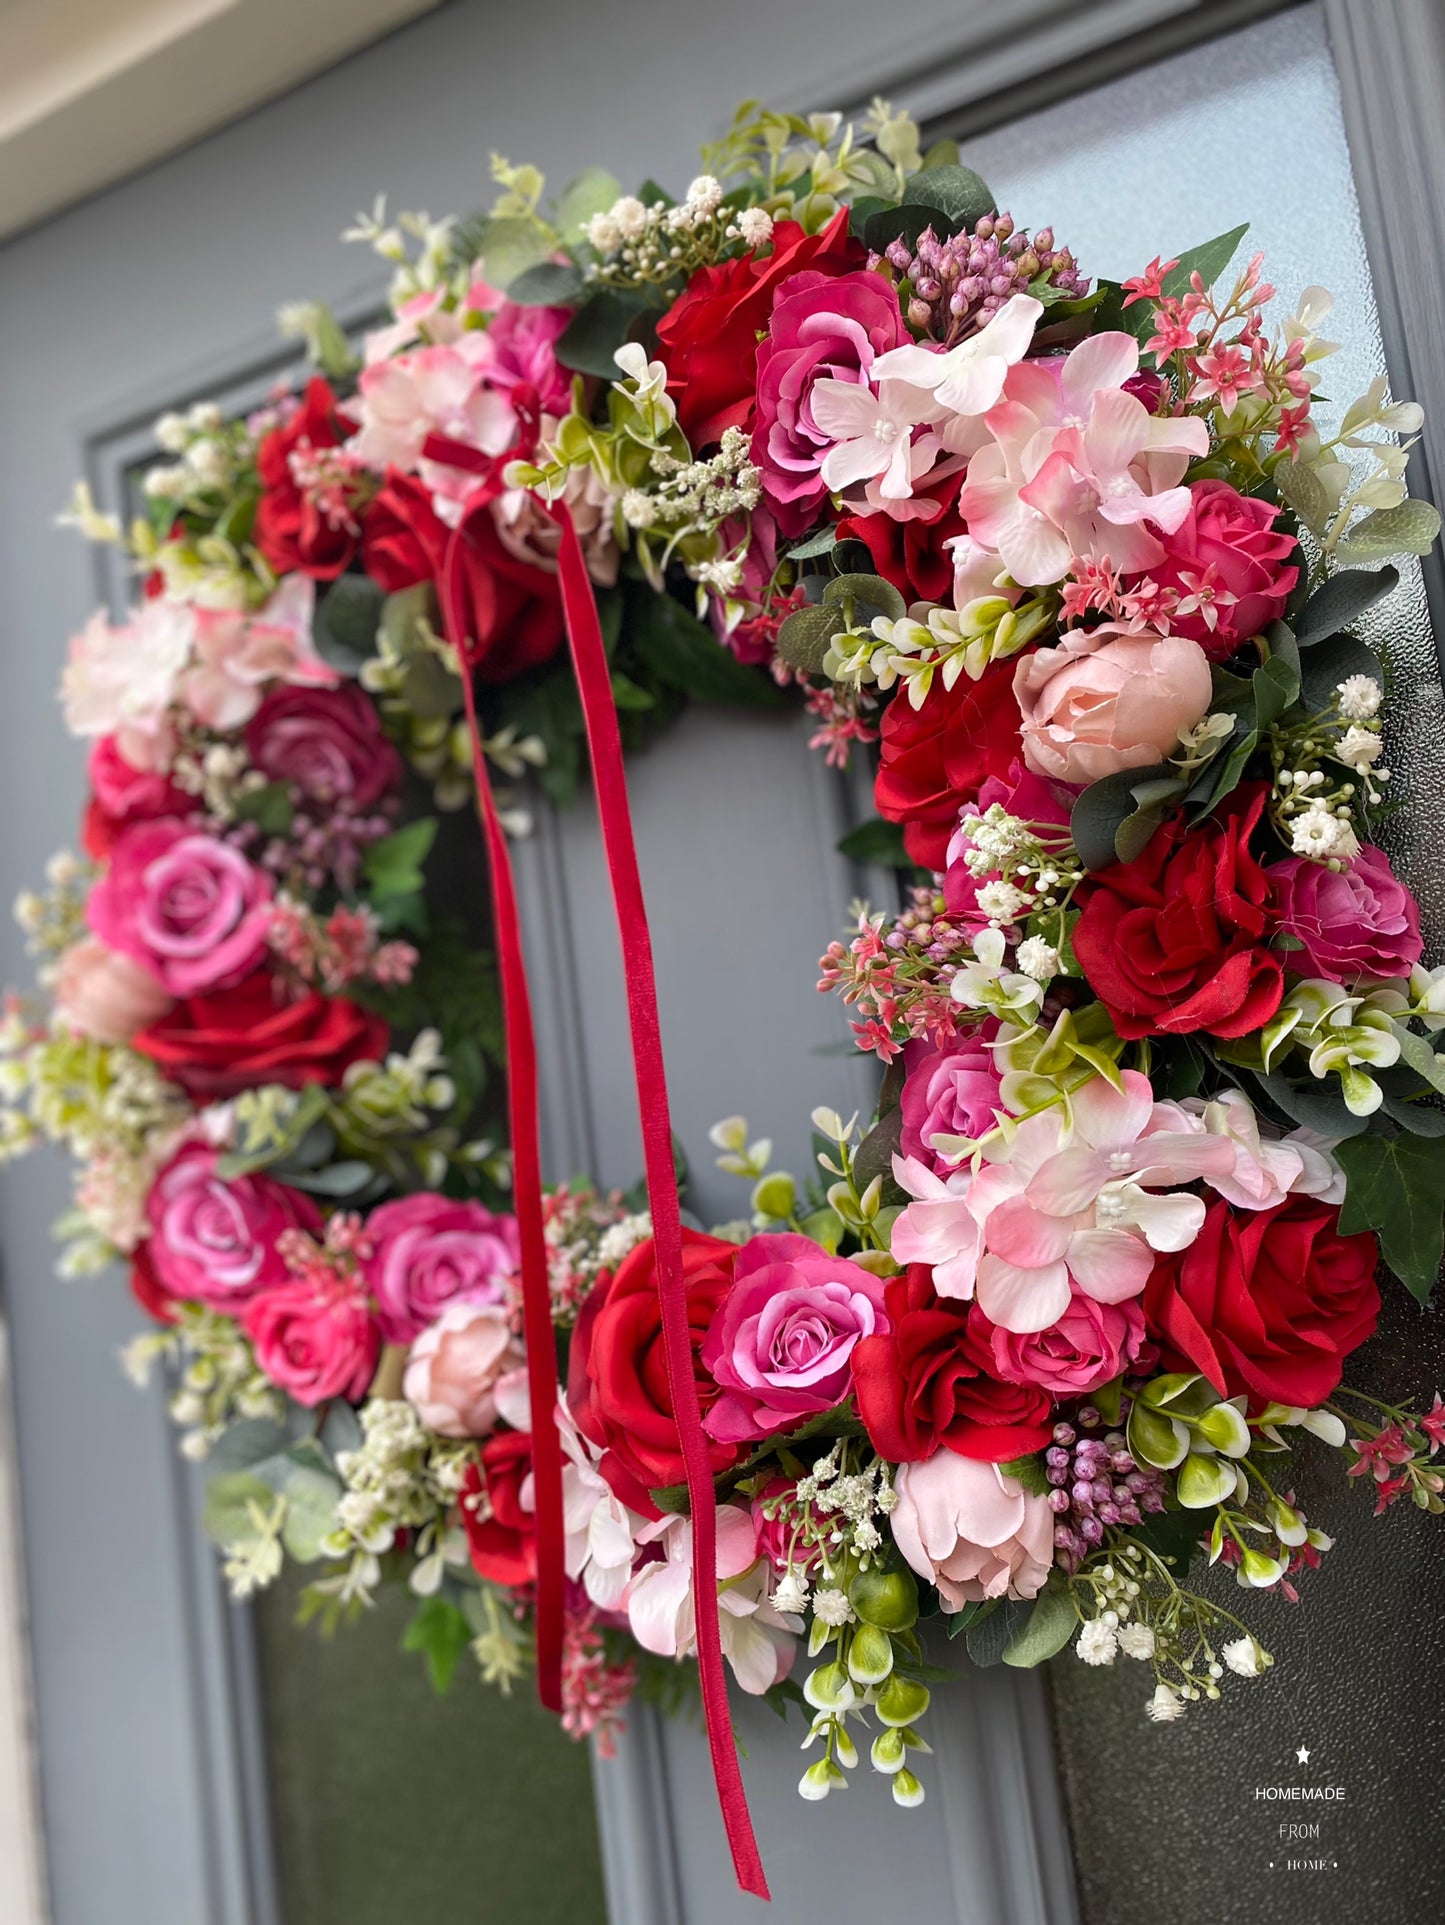 Valentines inspired full circular wreath